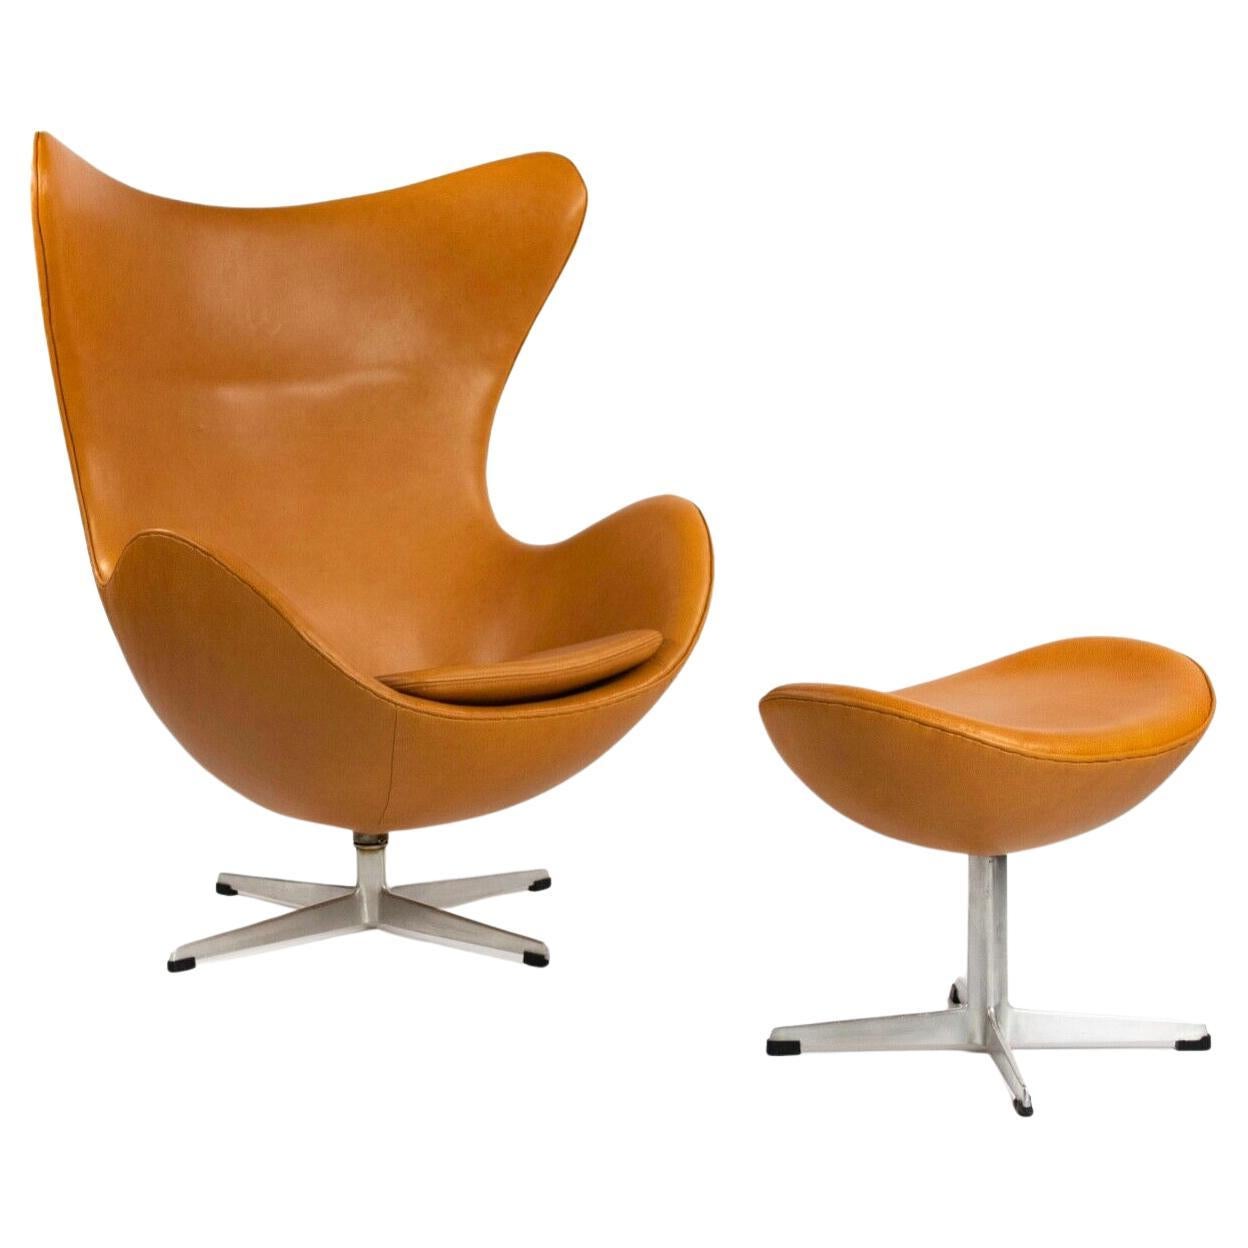 1959 Arne Jacobsen for Fritz Hansen Egg Chair & Ottoman in Tan / Cognac Leather